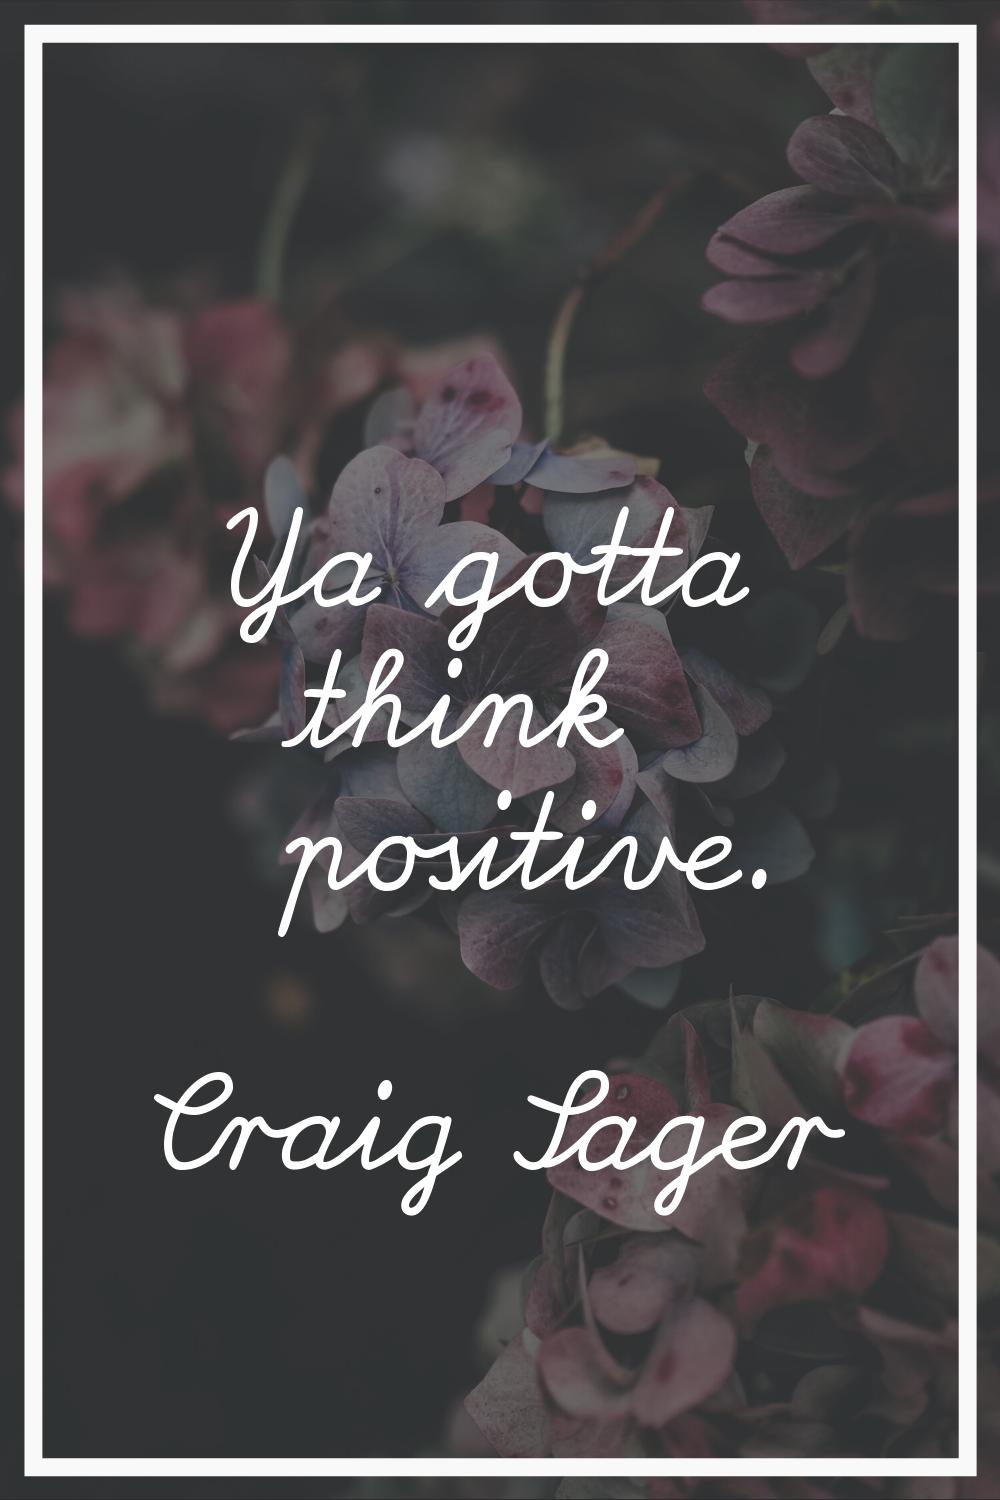 Ya gotta think positive.